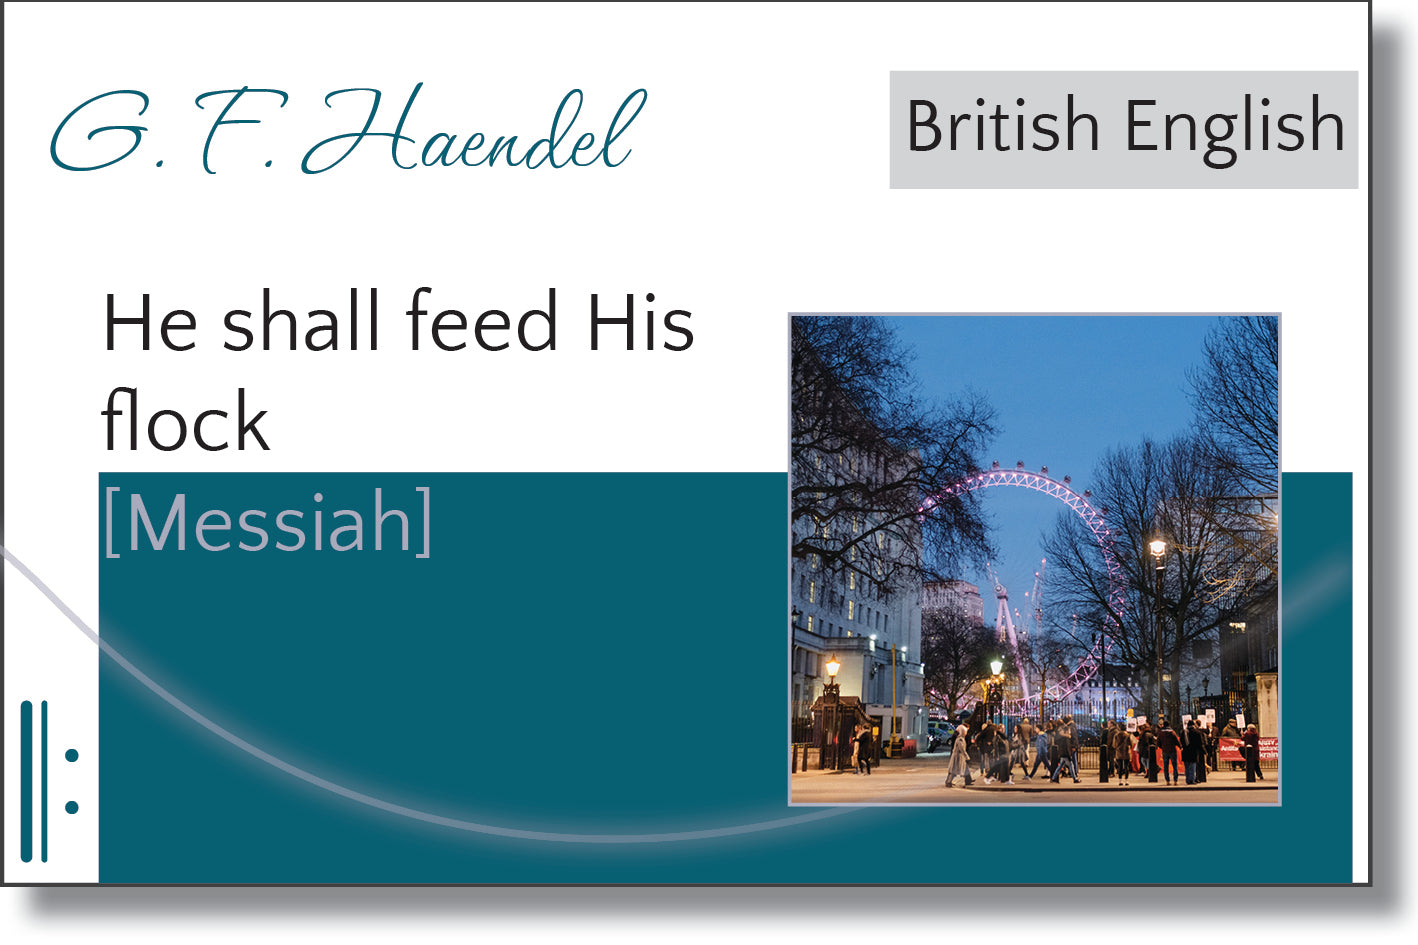 Messiah - He shall feed His flock